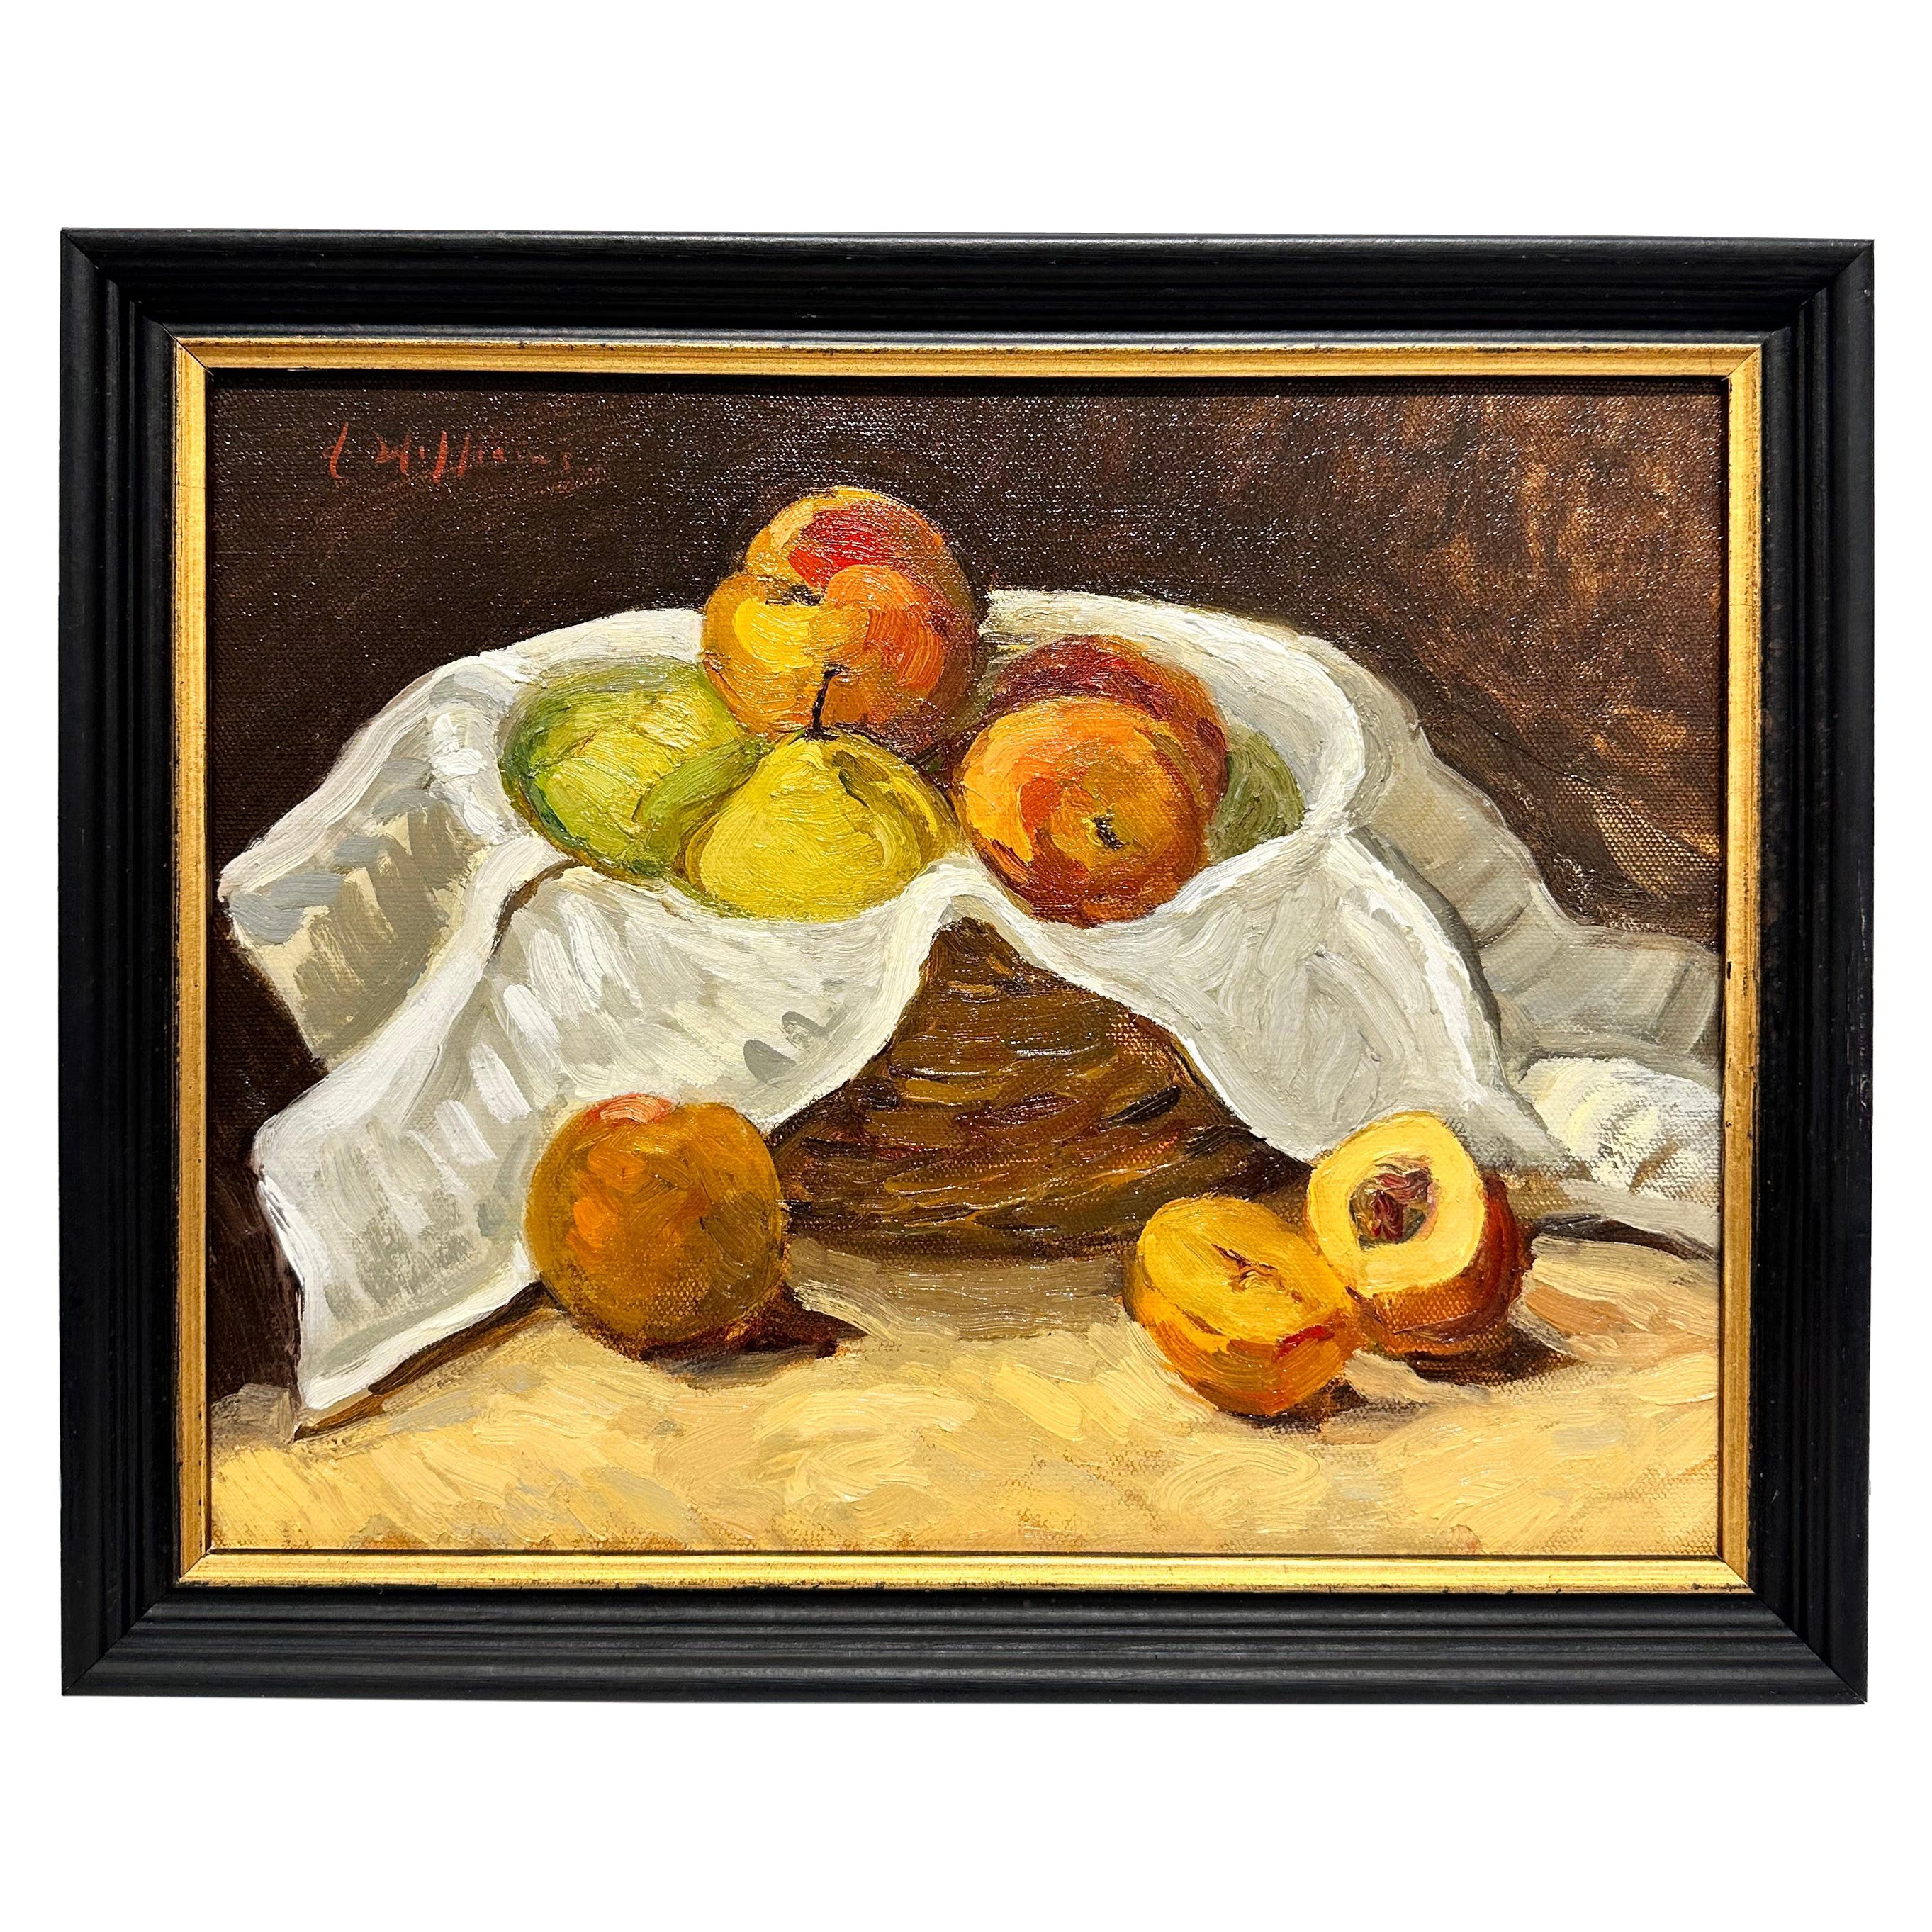 Basket of Fruit "Original Oil Painting"